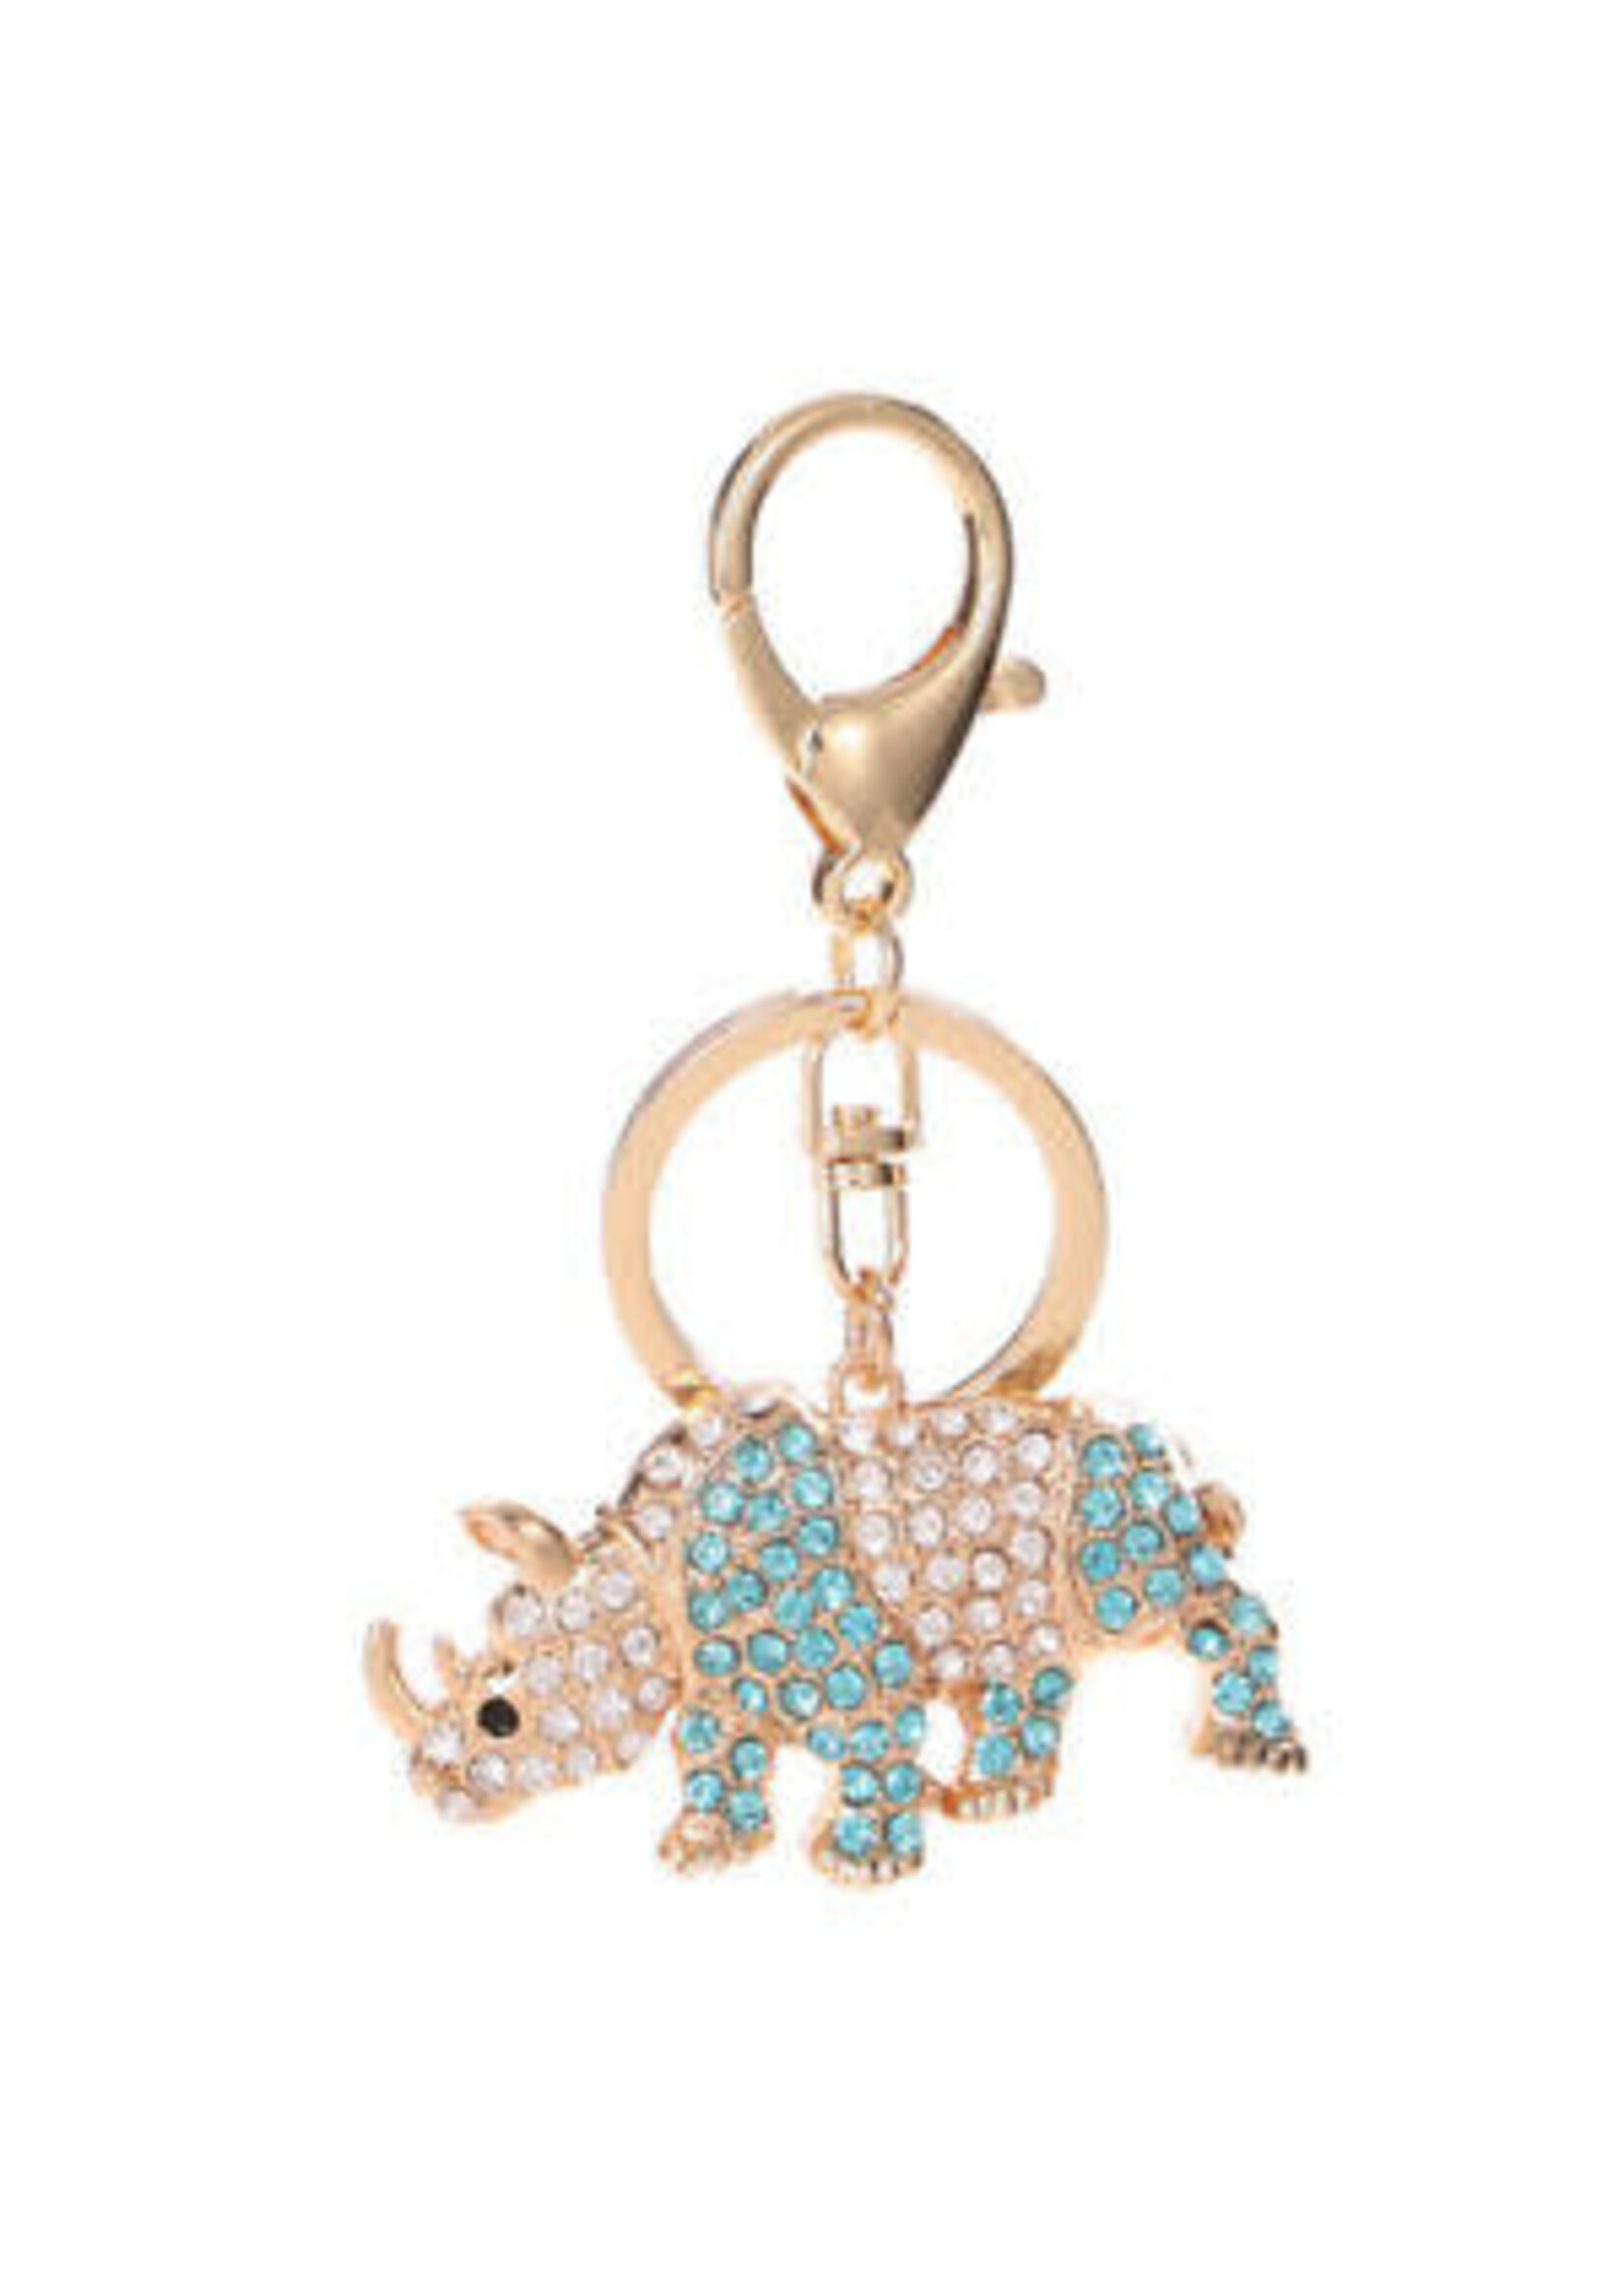 Fashion jewelry Key Chains